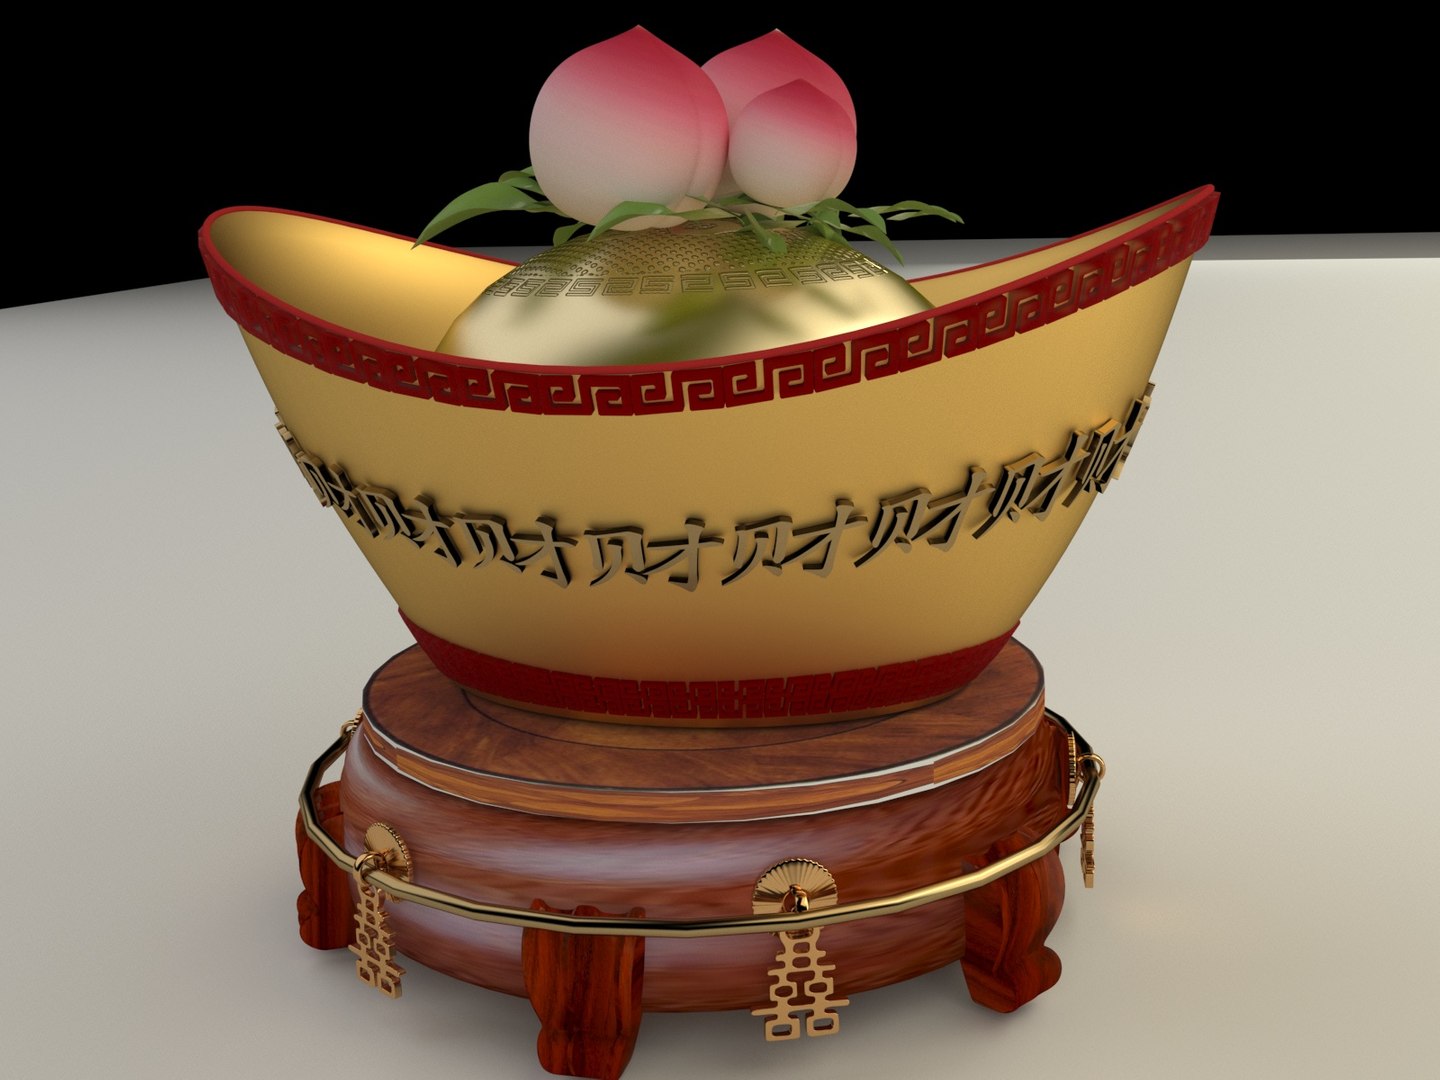 Chinese gold ingot 3D model - TurboSquid 1598503